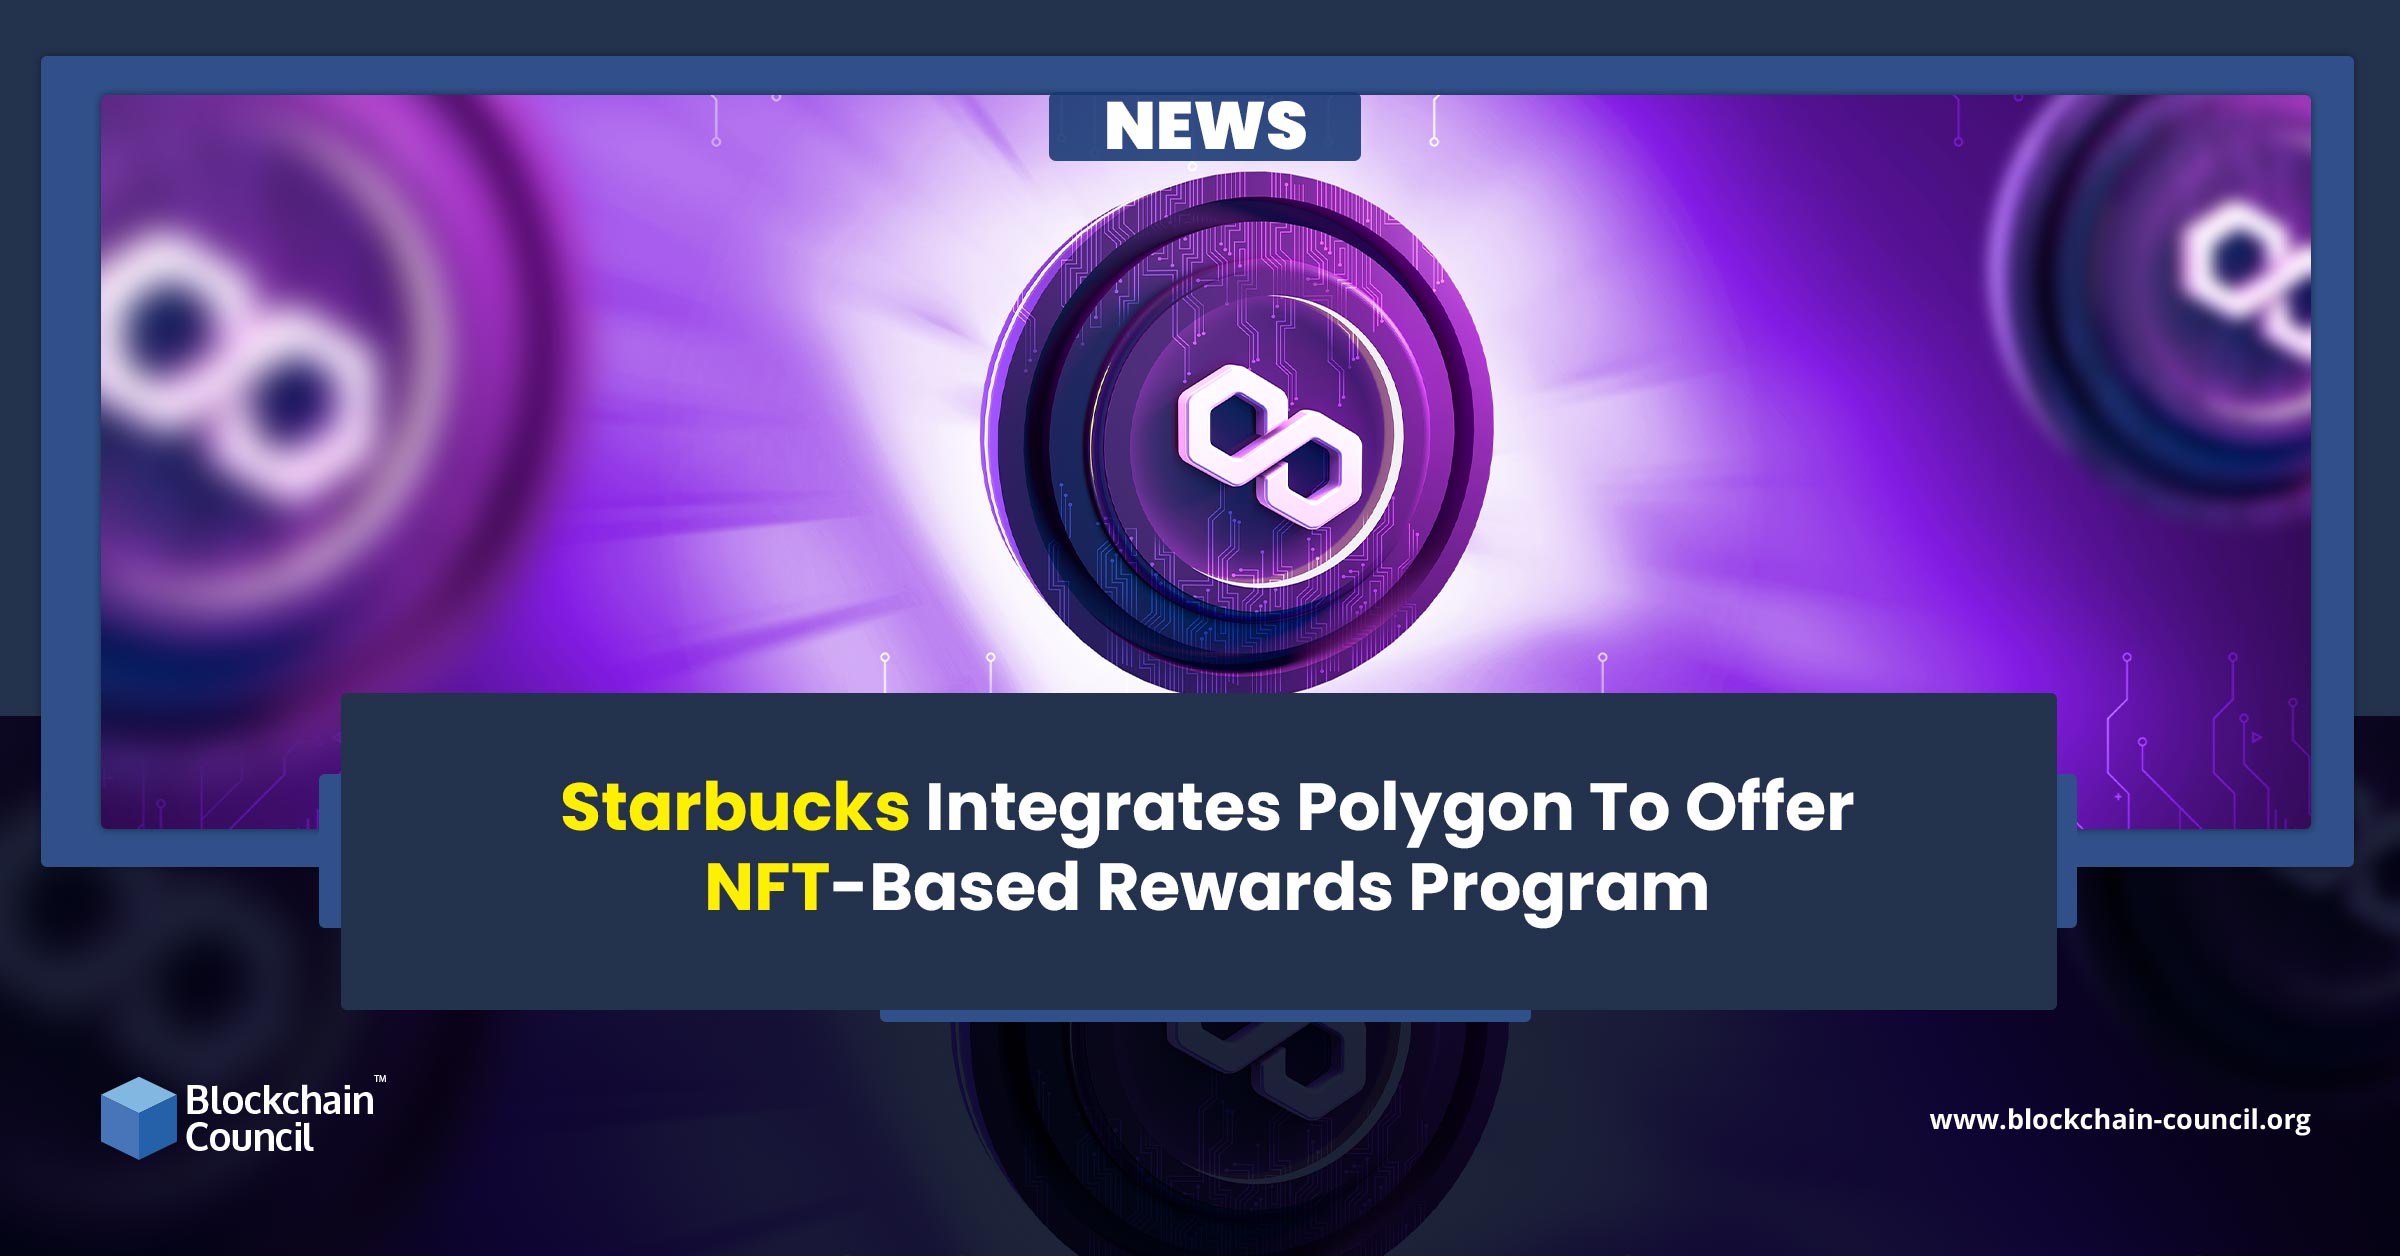 Starbucks Integrates Polygon To Offer NFT-Based Rewards Program